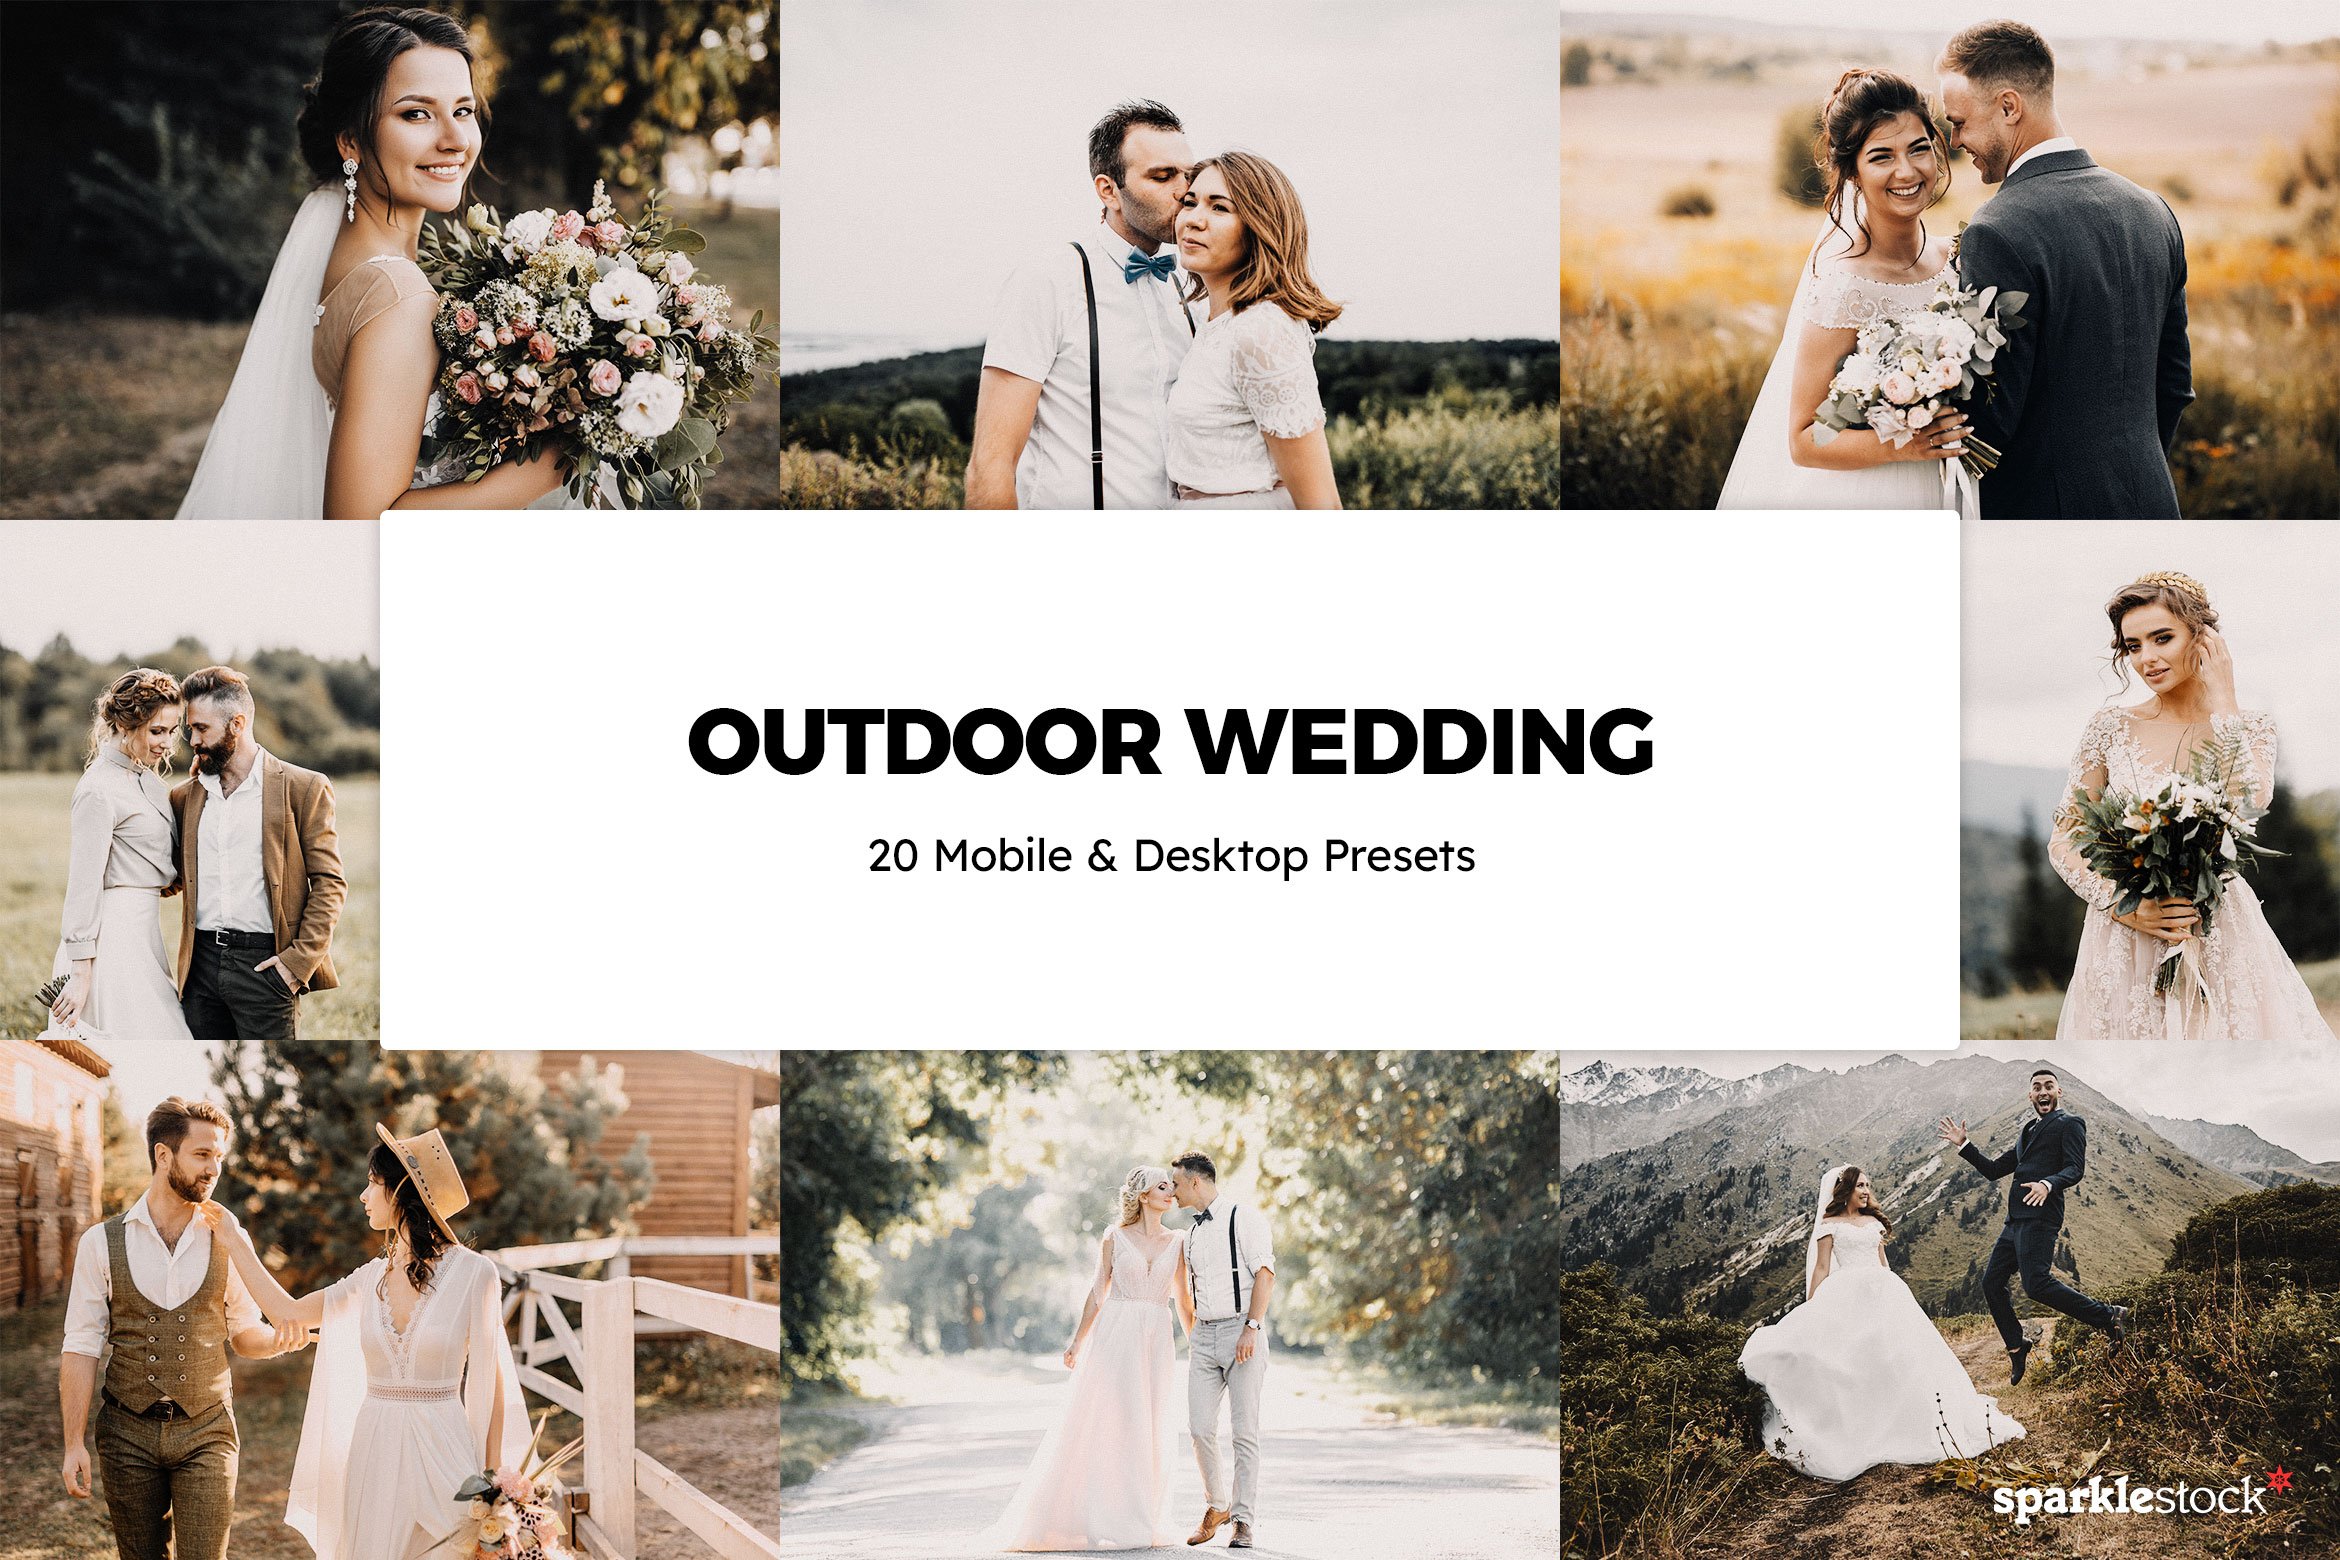 20 Outdoor Wedding Lightroom Presetscover image.